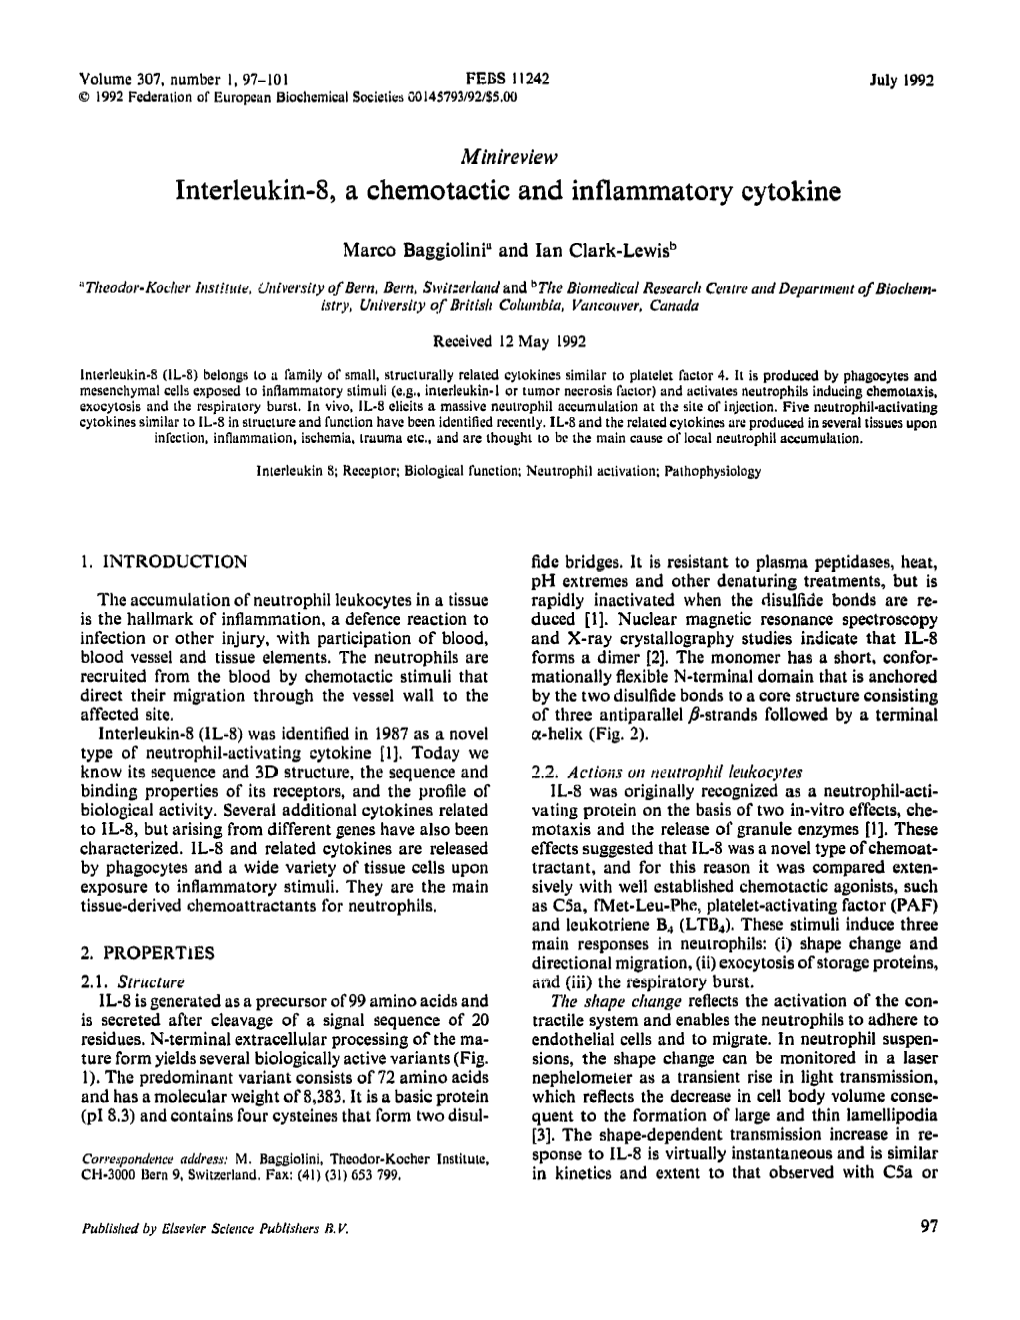 Interleukin-8, a Chemotactic and Inflammatory Cytokine